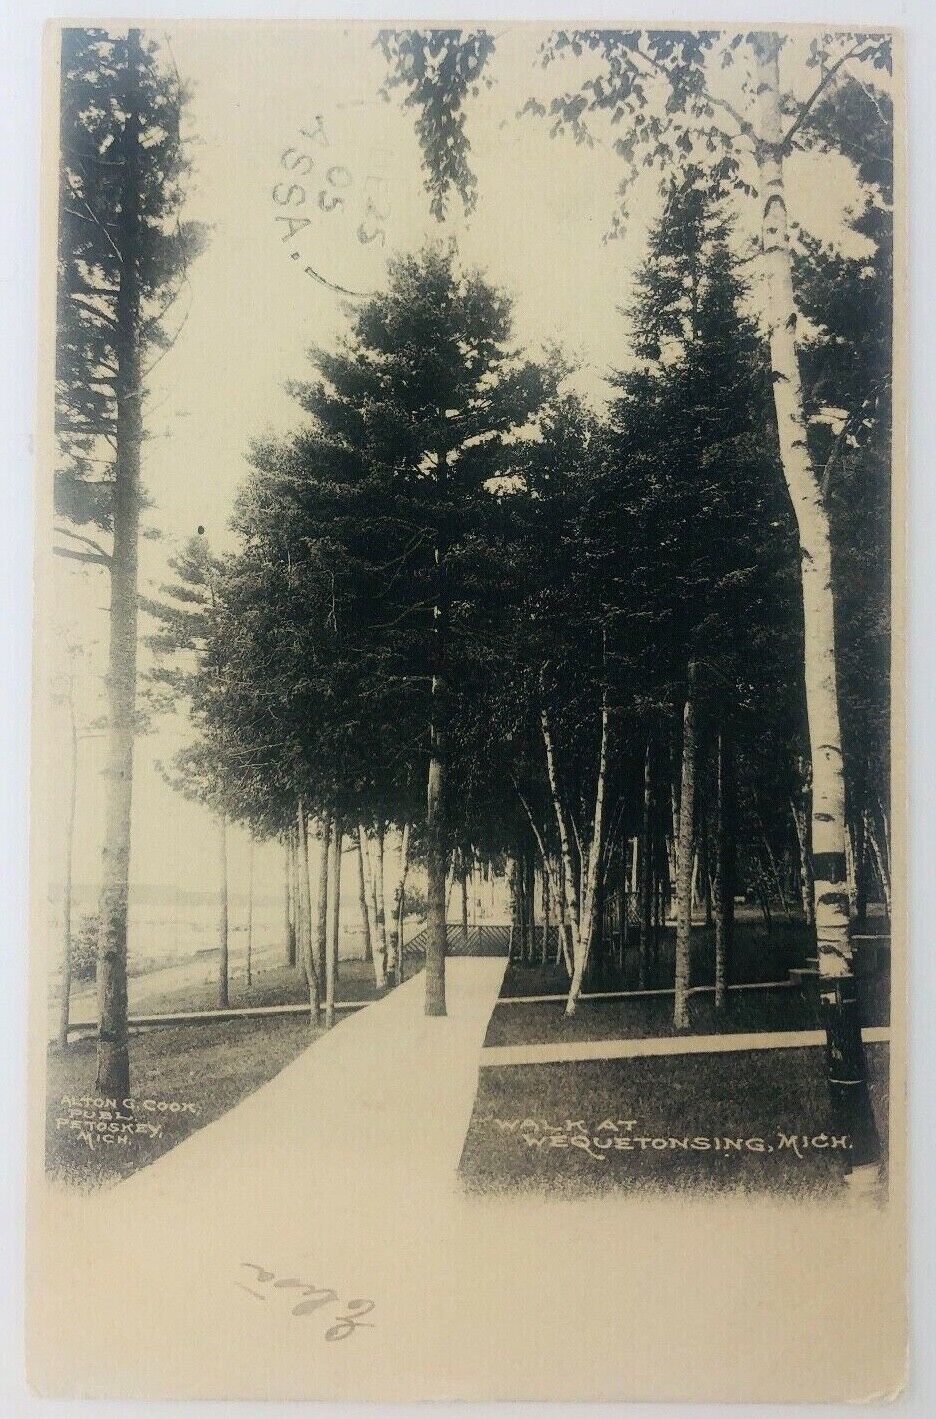 Vintage Wesquetonsing Michigan MI RPPC Sidewalk in Wesquetonsing Postcard 1905